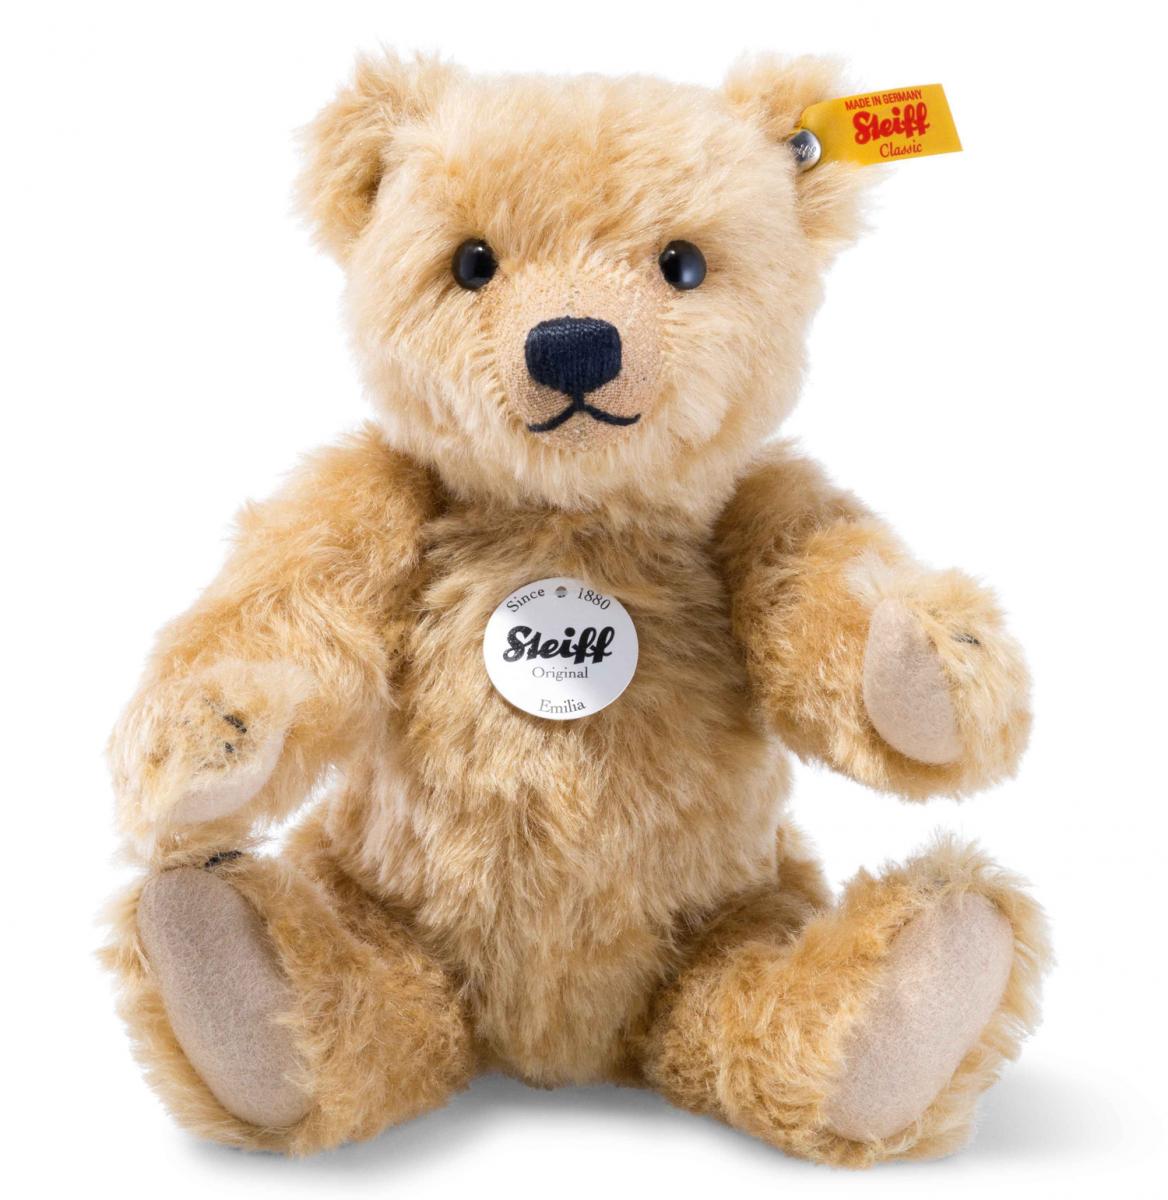 Emilia Teddy bear, 26cm, Steiff nallar säljs på Nalleriet.se